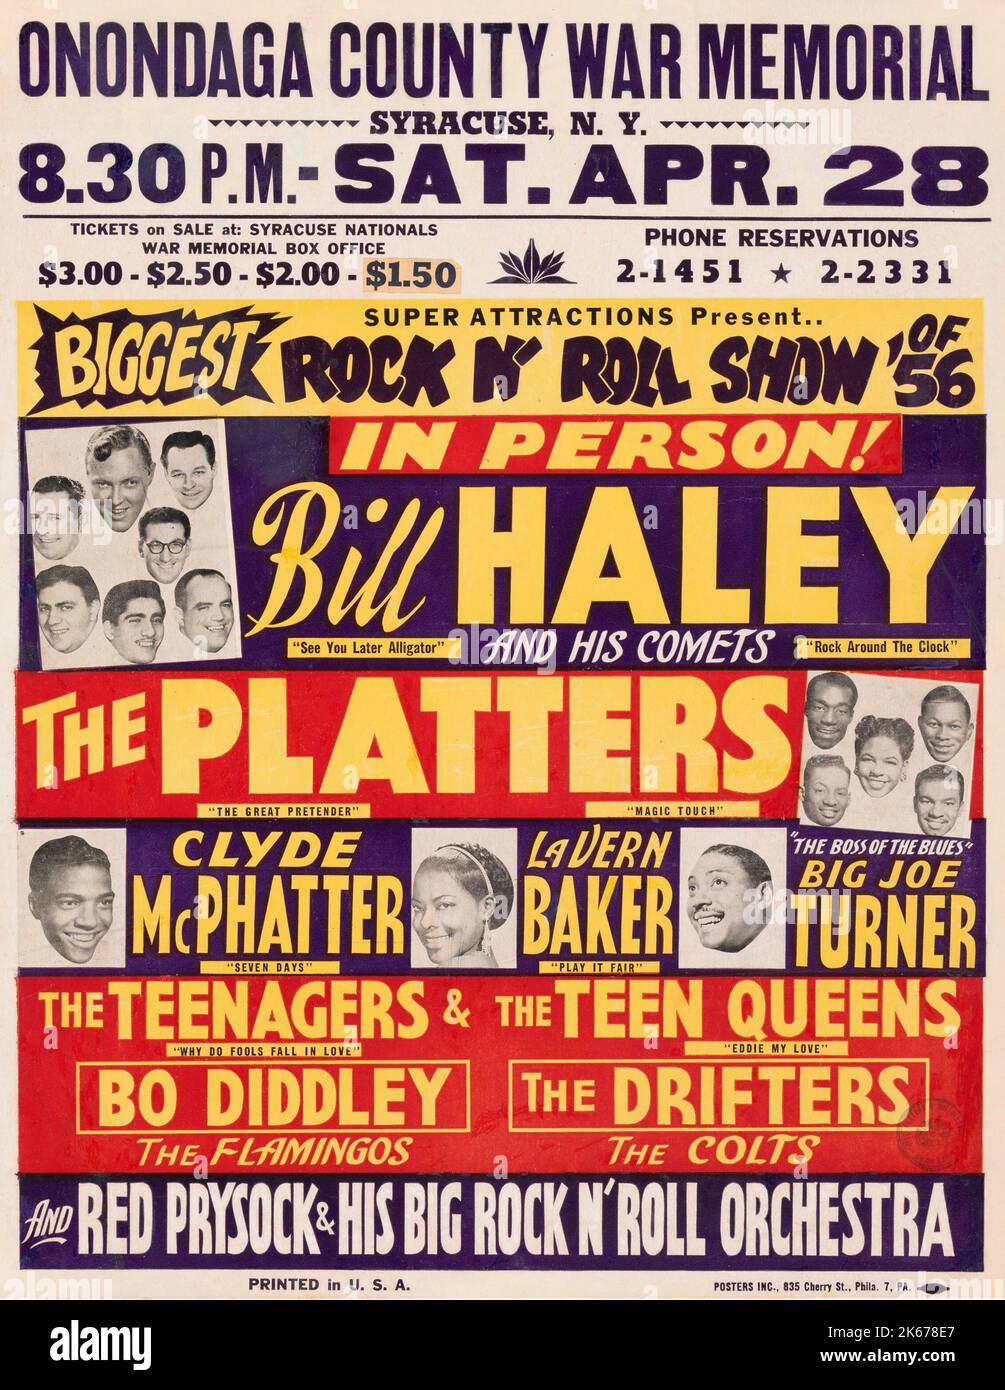 Bill Haley & His Comete, The Platters, Bo Diddley, The Drifters 1956, Poster da concerto Jumbo "più grande spettacolo rock 'n' roll" - Onondaga County War Memorial, Syracuse, New York Foto Stock